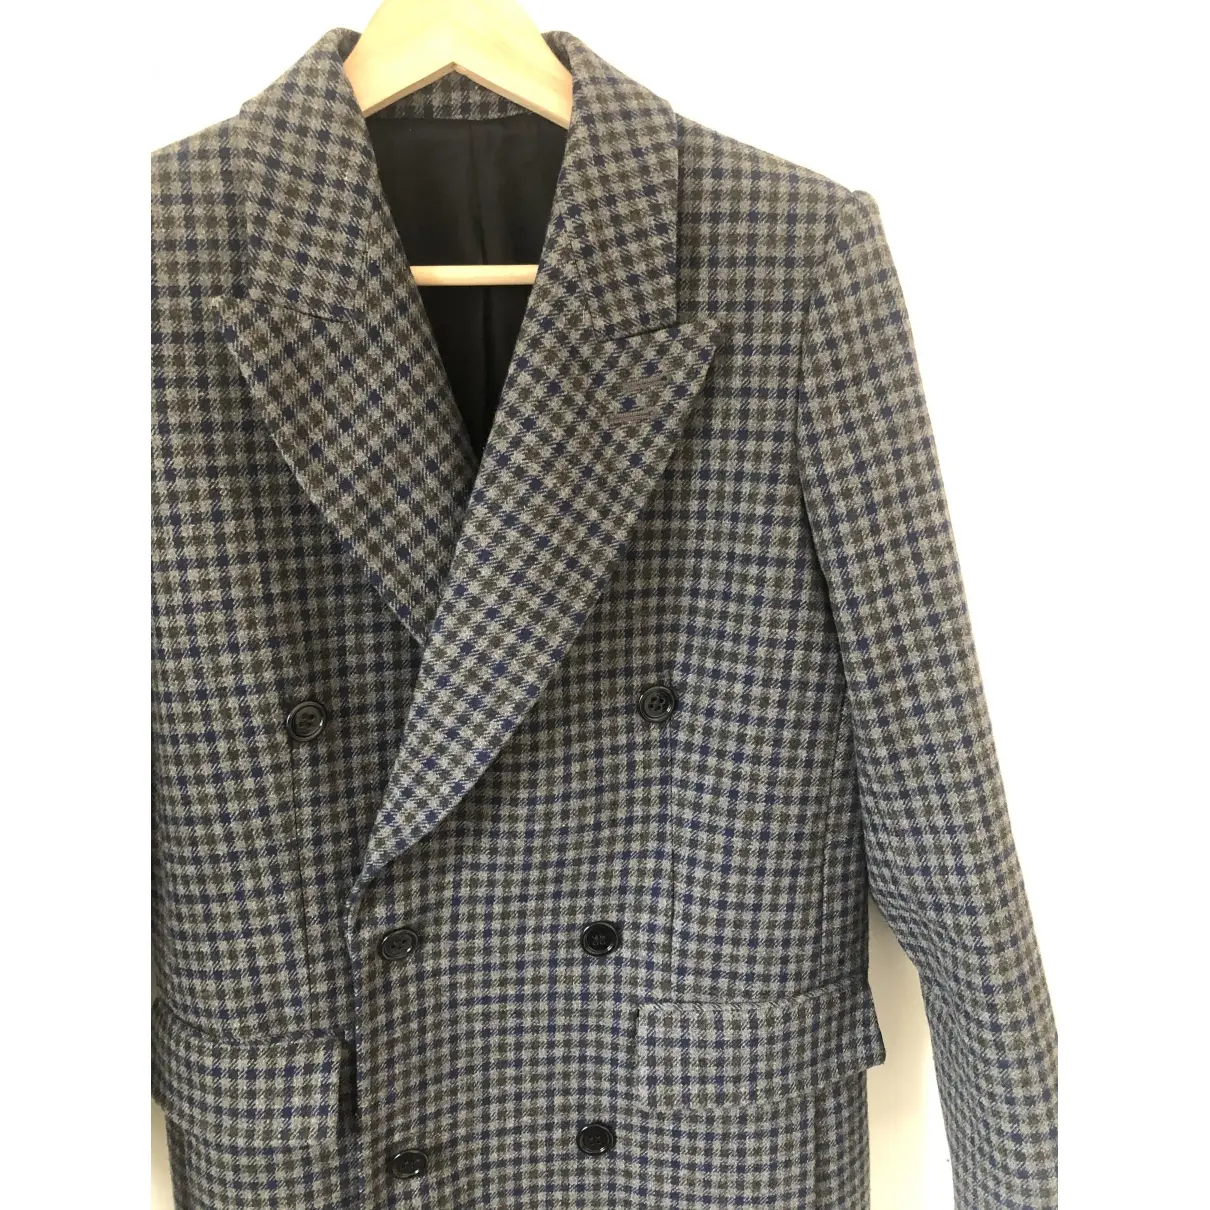 Buy The Kooples Fall Winter 2019 wool coat online